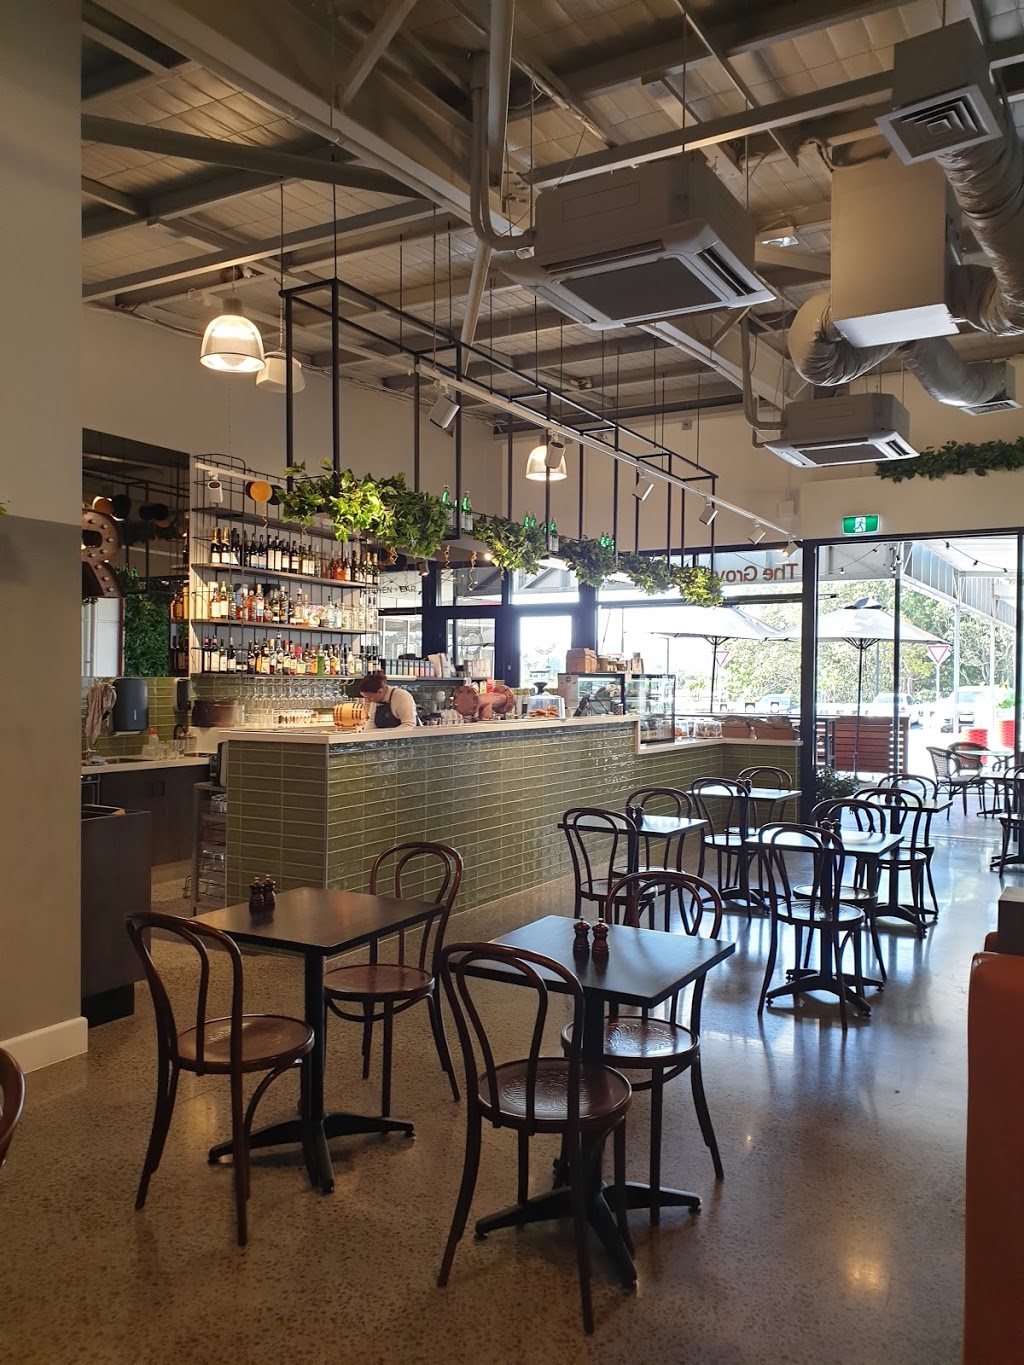 The Grove Kitchen + Bar | restaurant | Shop 24/101 Valley Way, Mount Cotton QLD 4165, Australia | 0738295530 OR +61 7 3829 5530